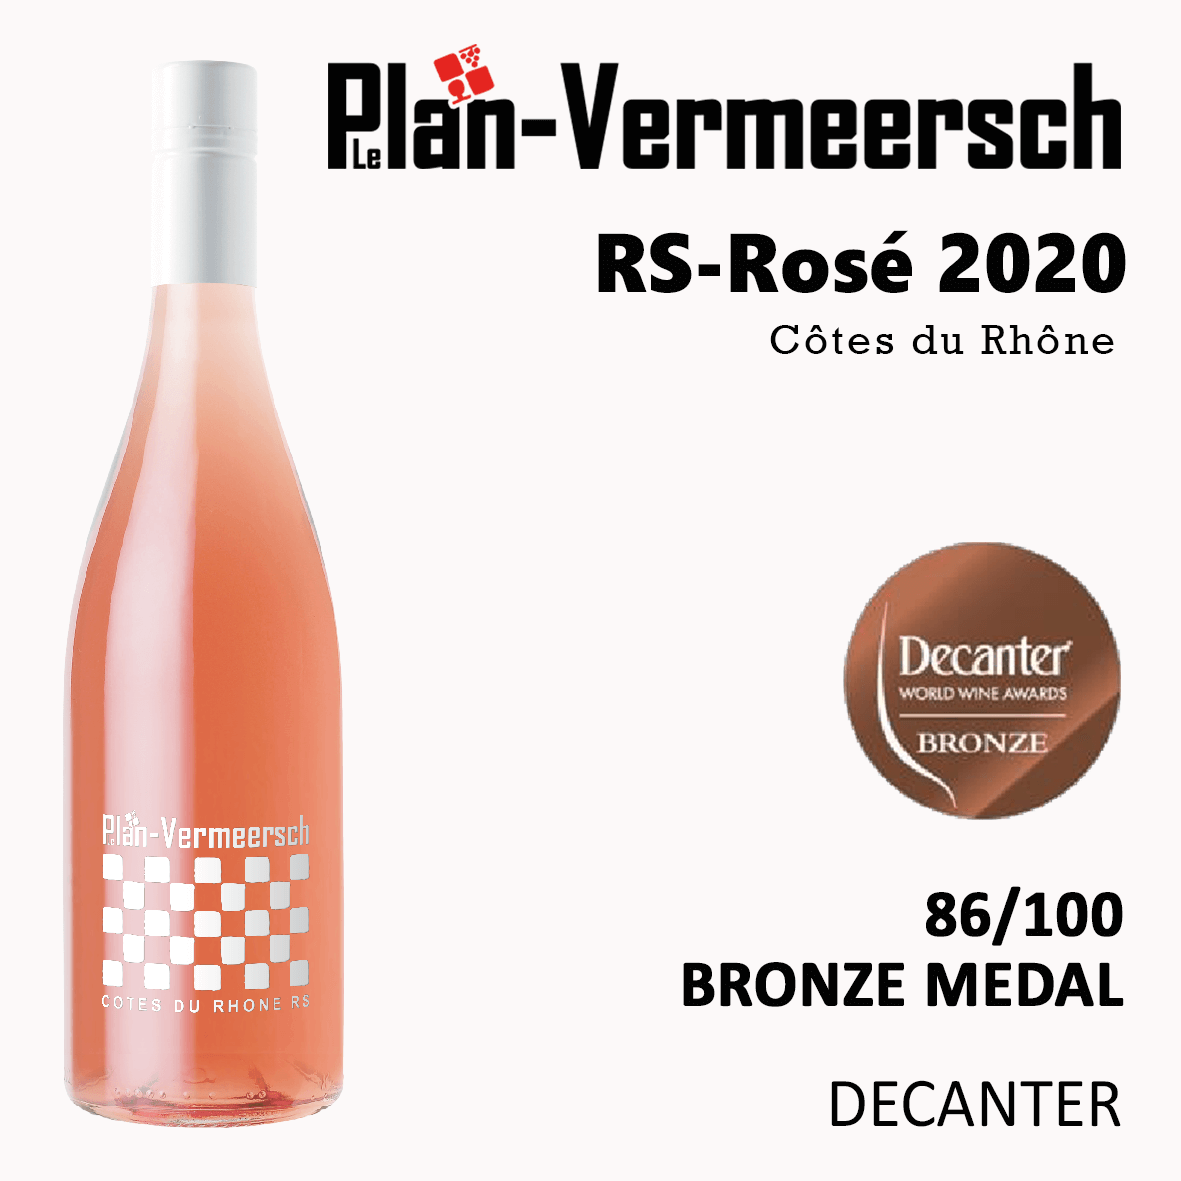 Bottle wine Cotes du Rhone RS-Rhone Rose Decanter bronze medal Leplan-Vermeersch